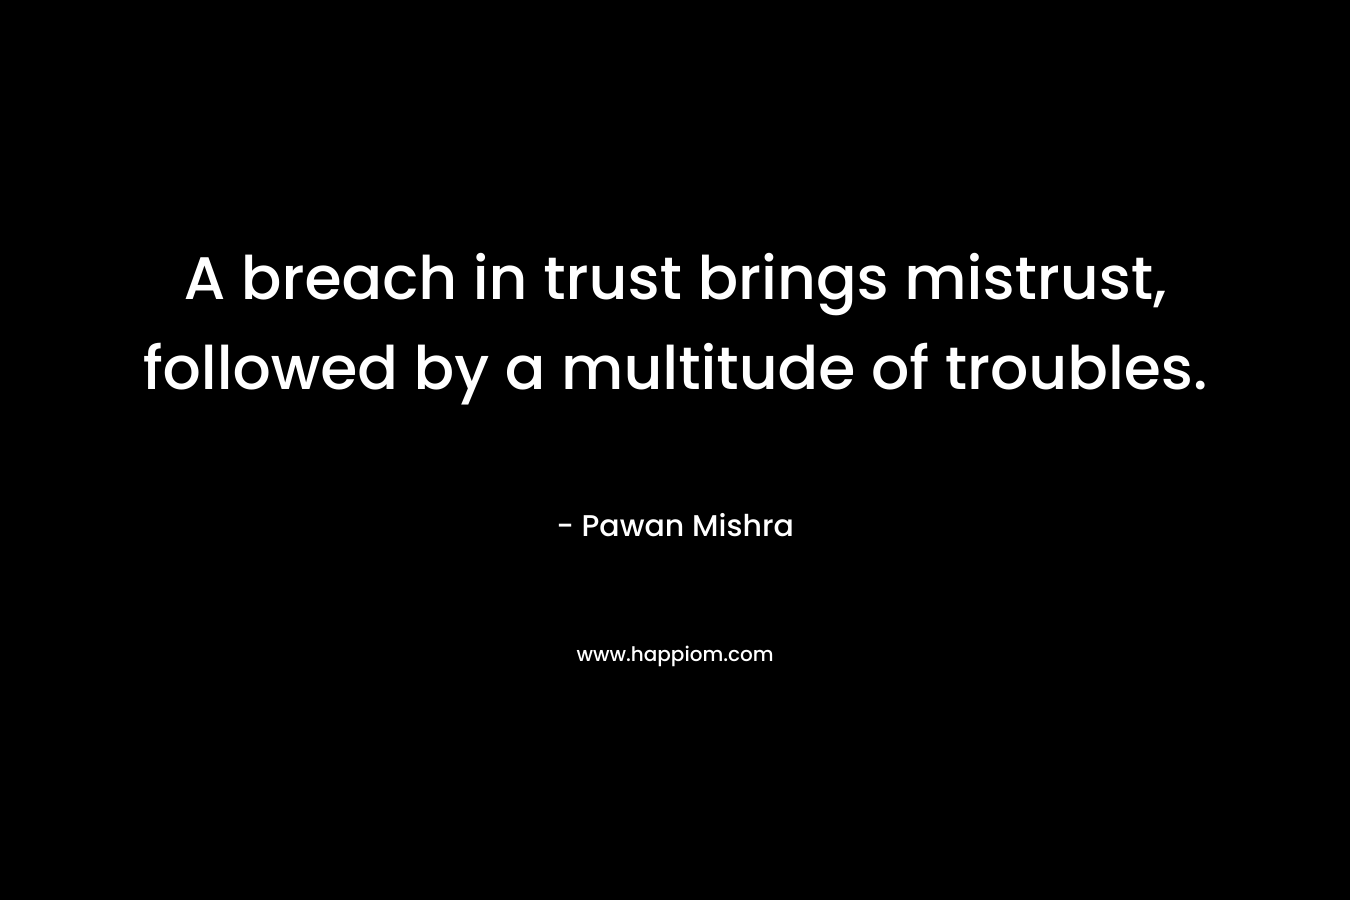 A breach in trust brings mistrust, followed by a multitude of troubles.